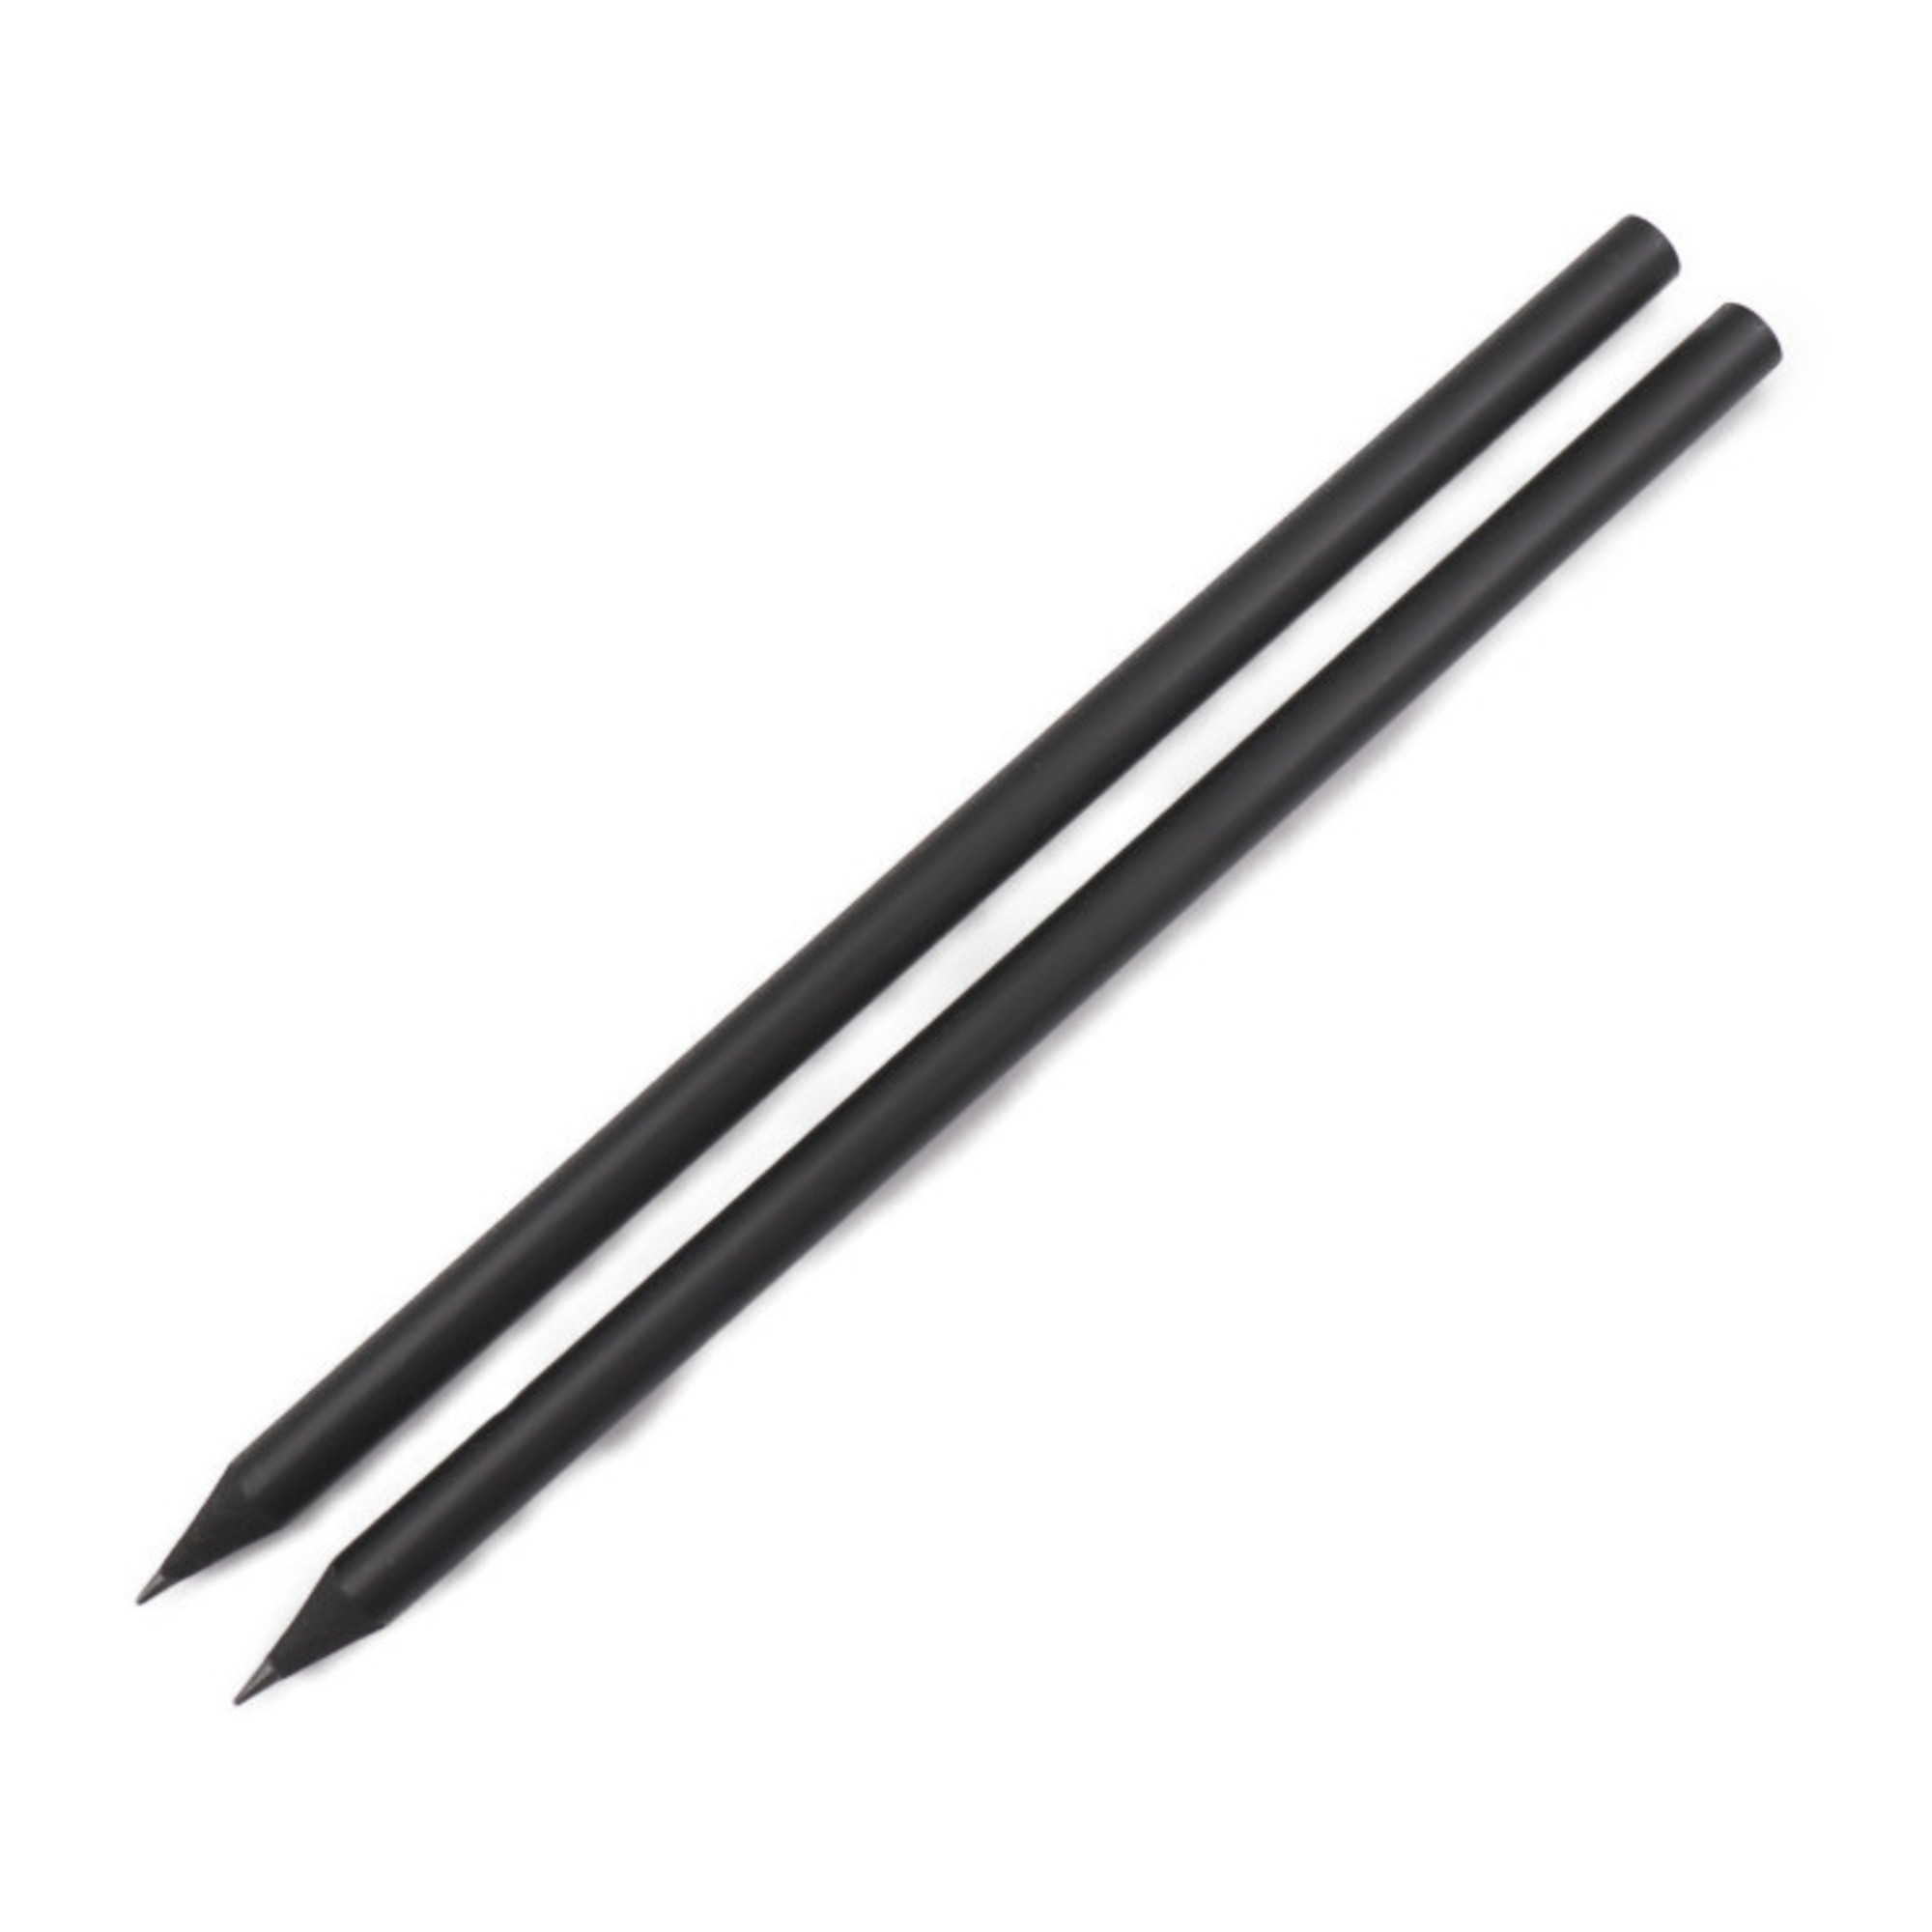 BOTTEGA VENETA Pencil Case Intrecciato Pen 730023 Calf Leather Burgundy Holder with Pencils